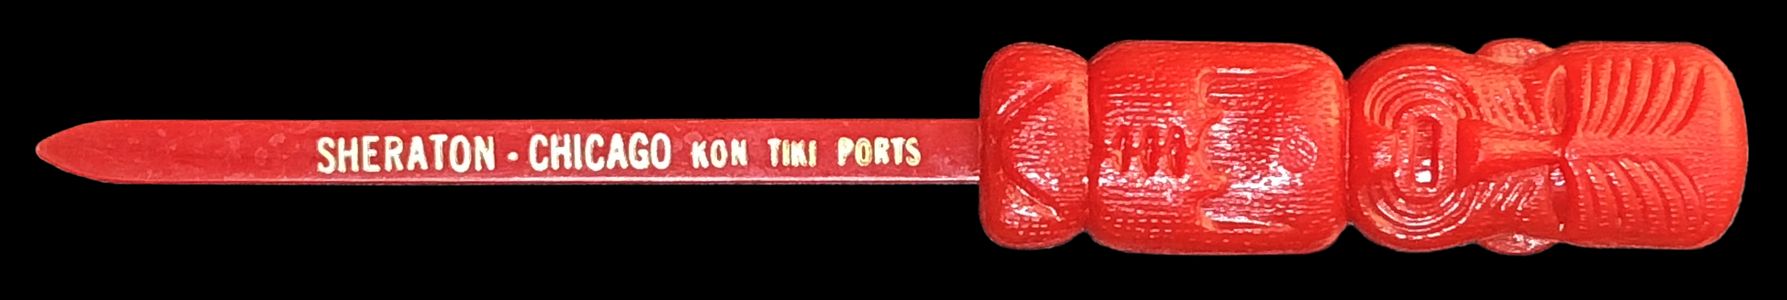 Kon Tiki Ports Chicago Red Silver F